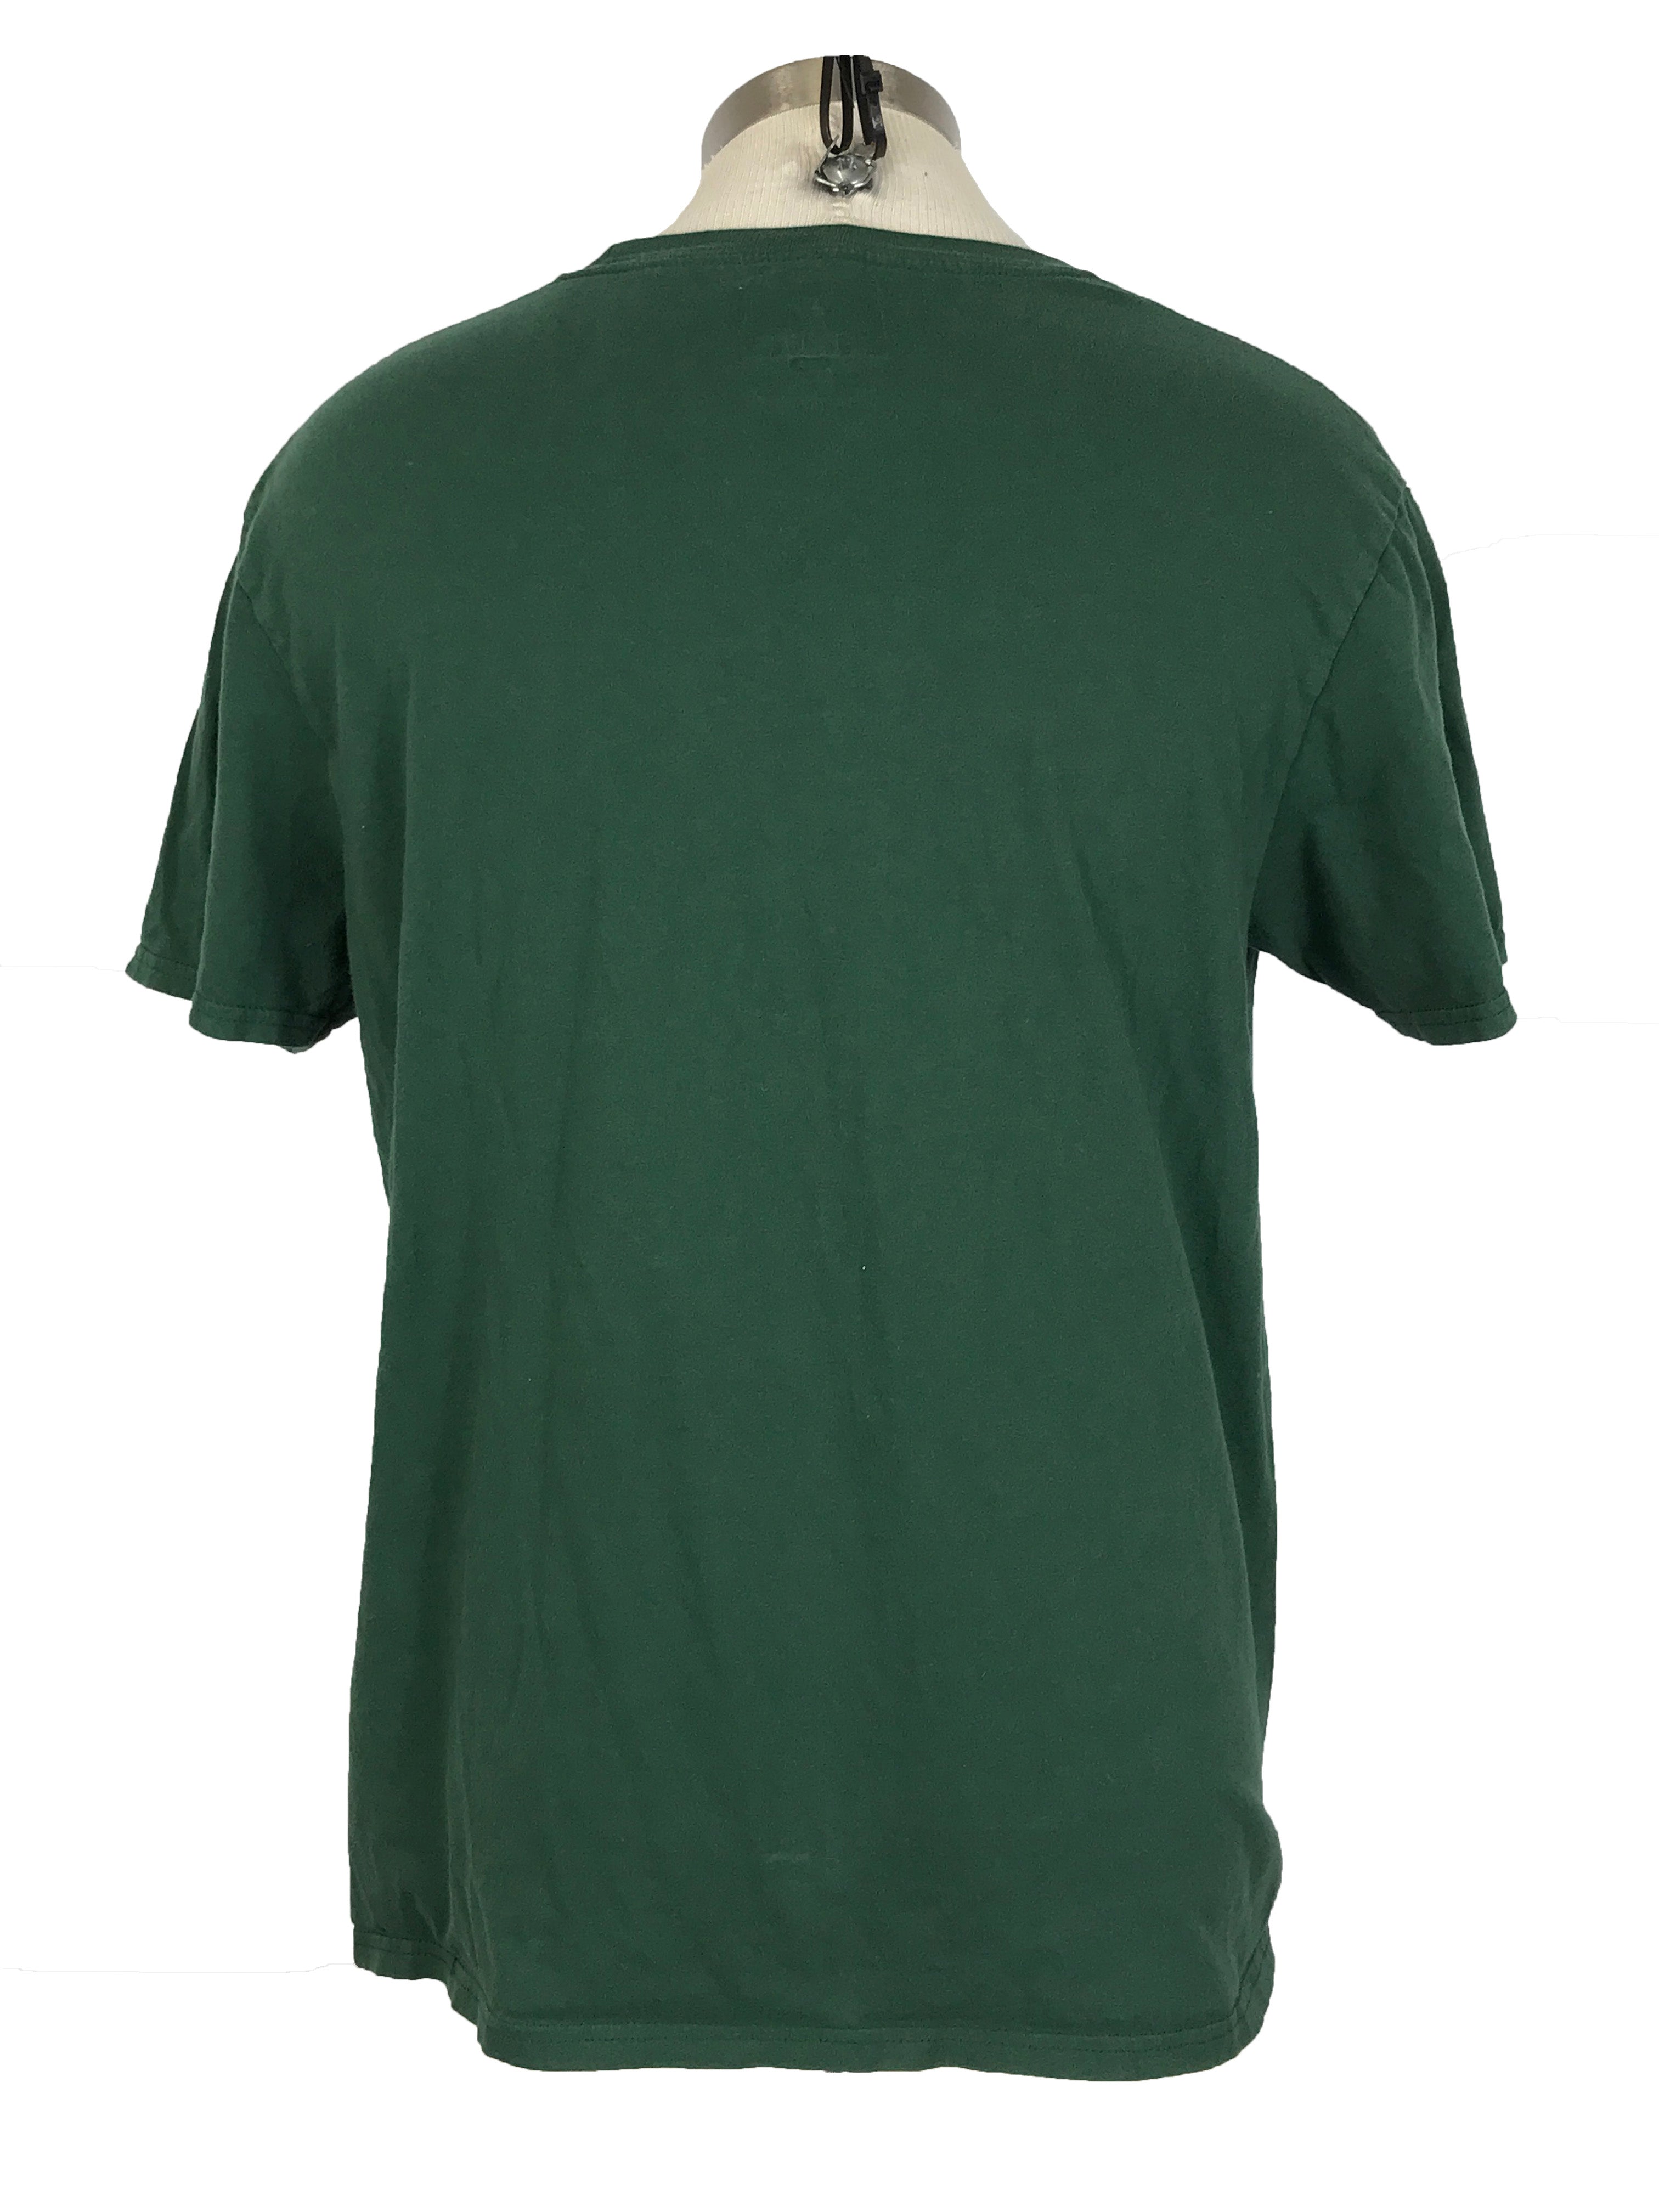 Michigan State University Green T-Shirt Unisex Large